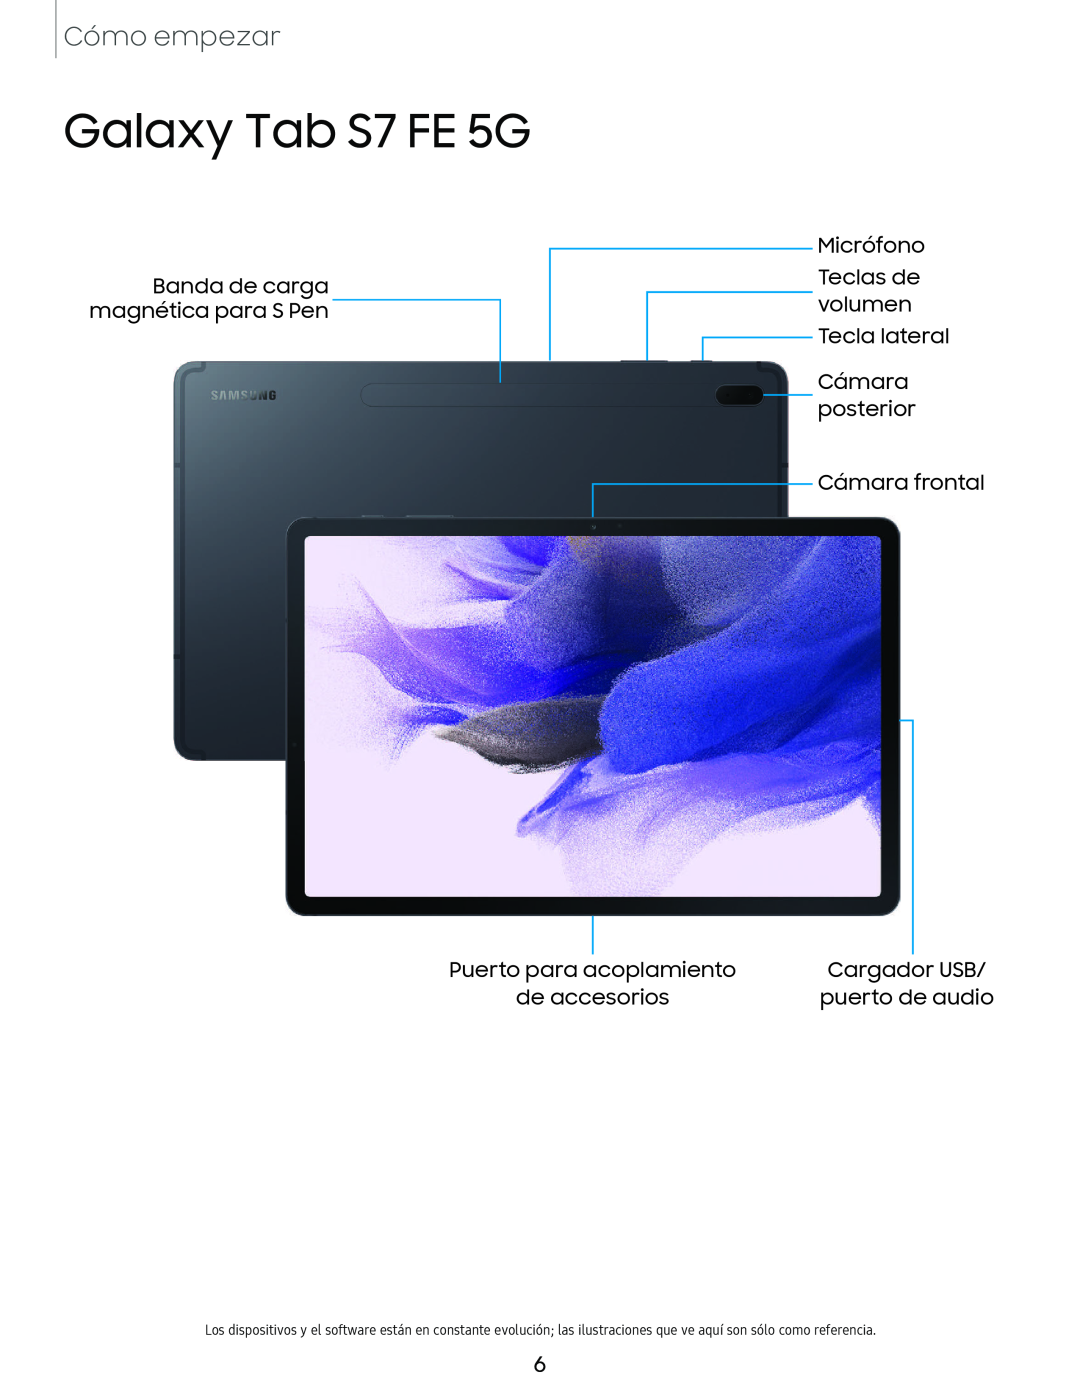 Galaxy Tab S7 FE 5G Galaxy Tab S7 FE T-Mobile